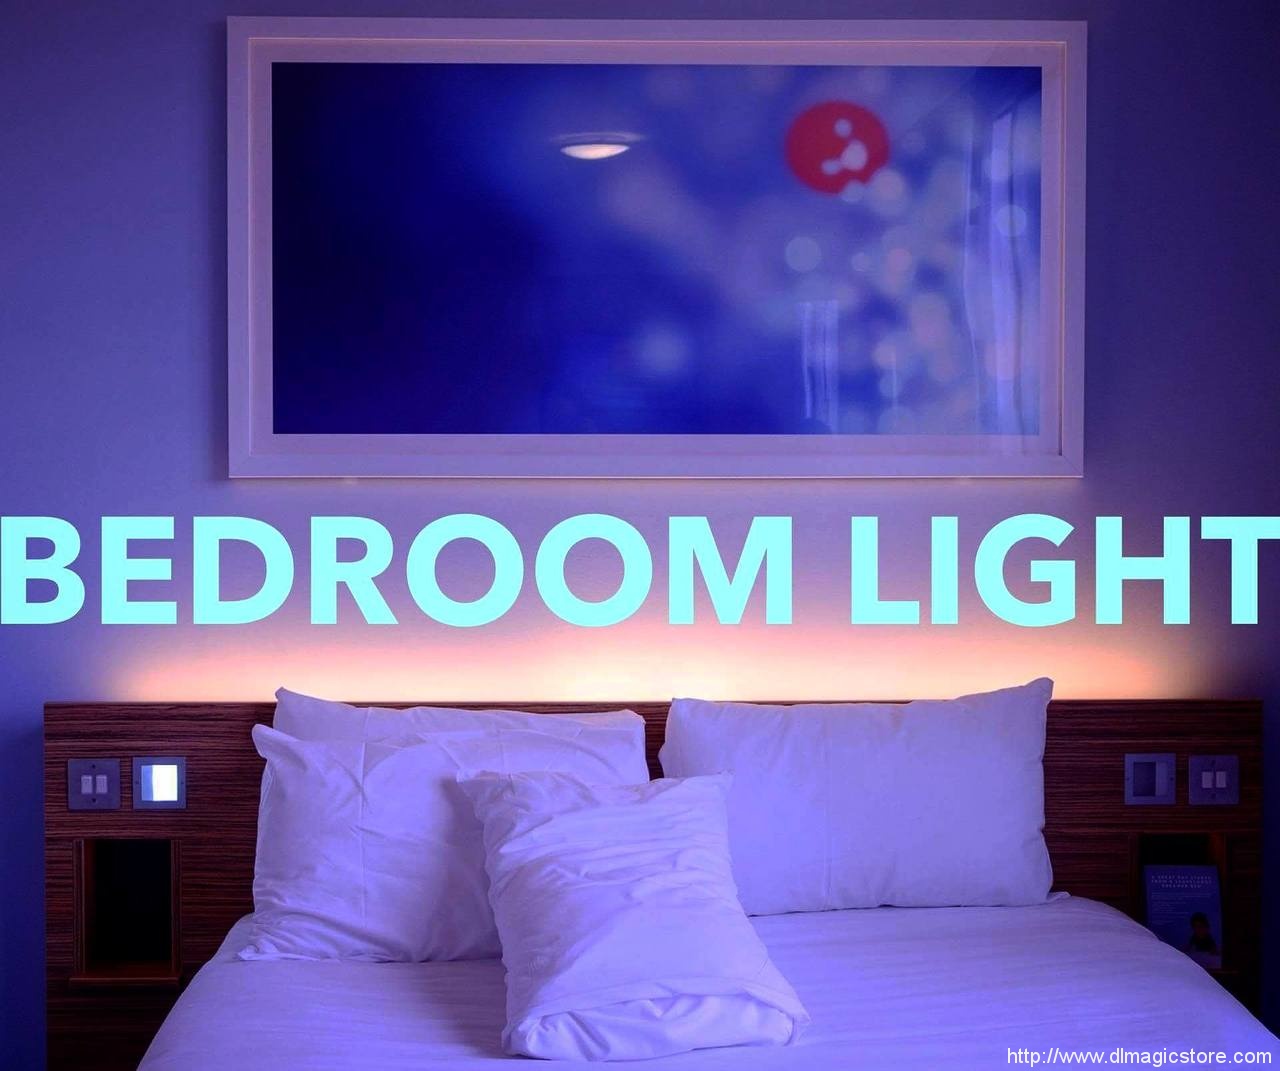 Bedroom Light by Steve Wachner (Instant Download)